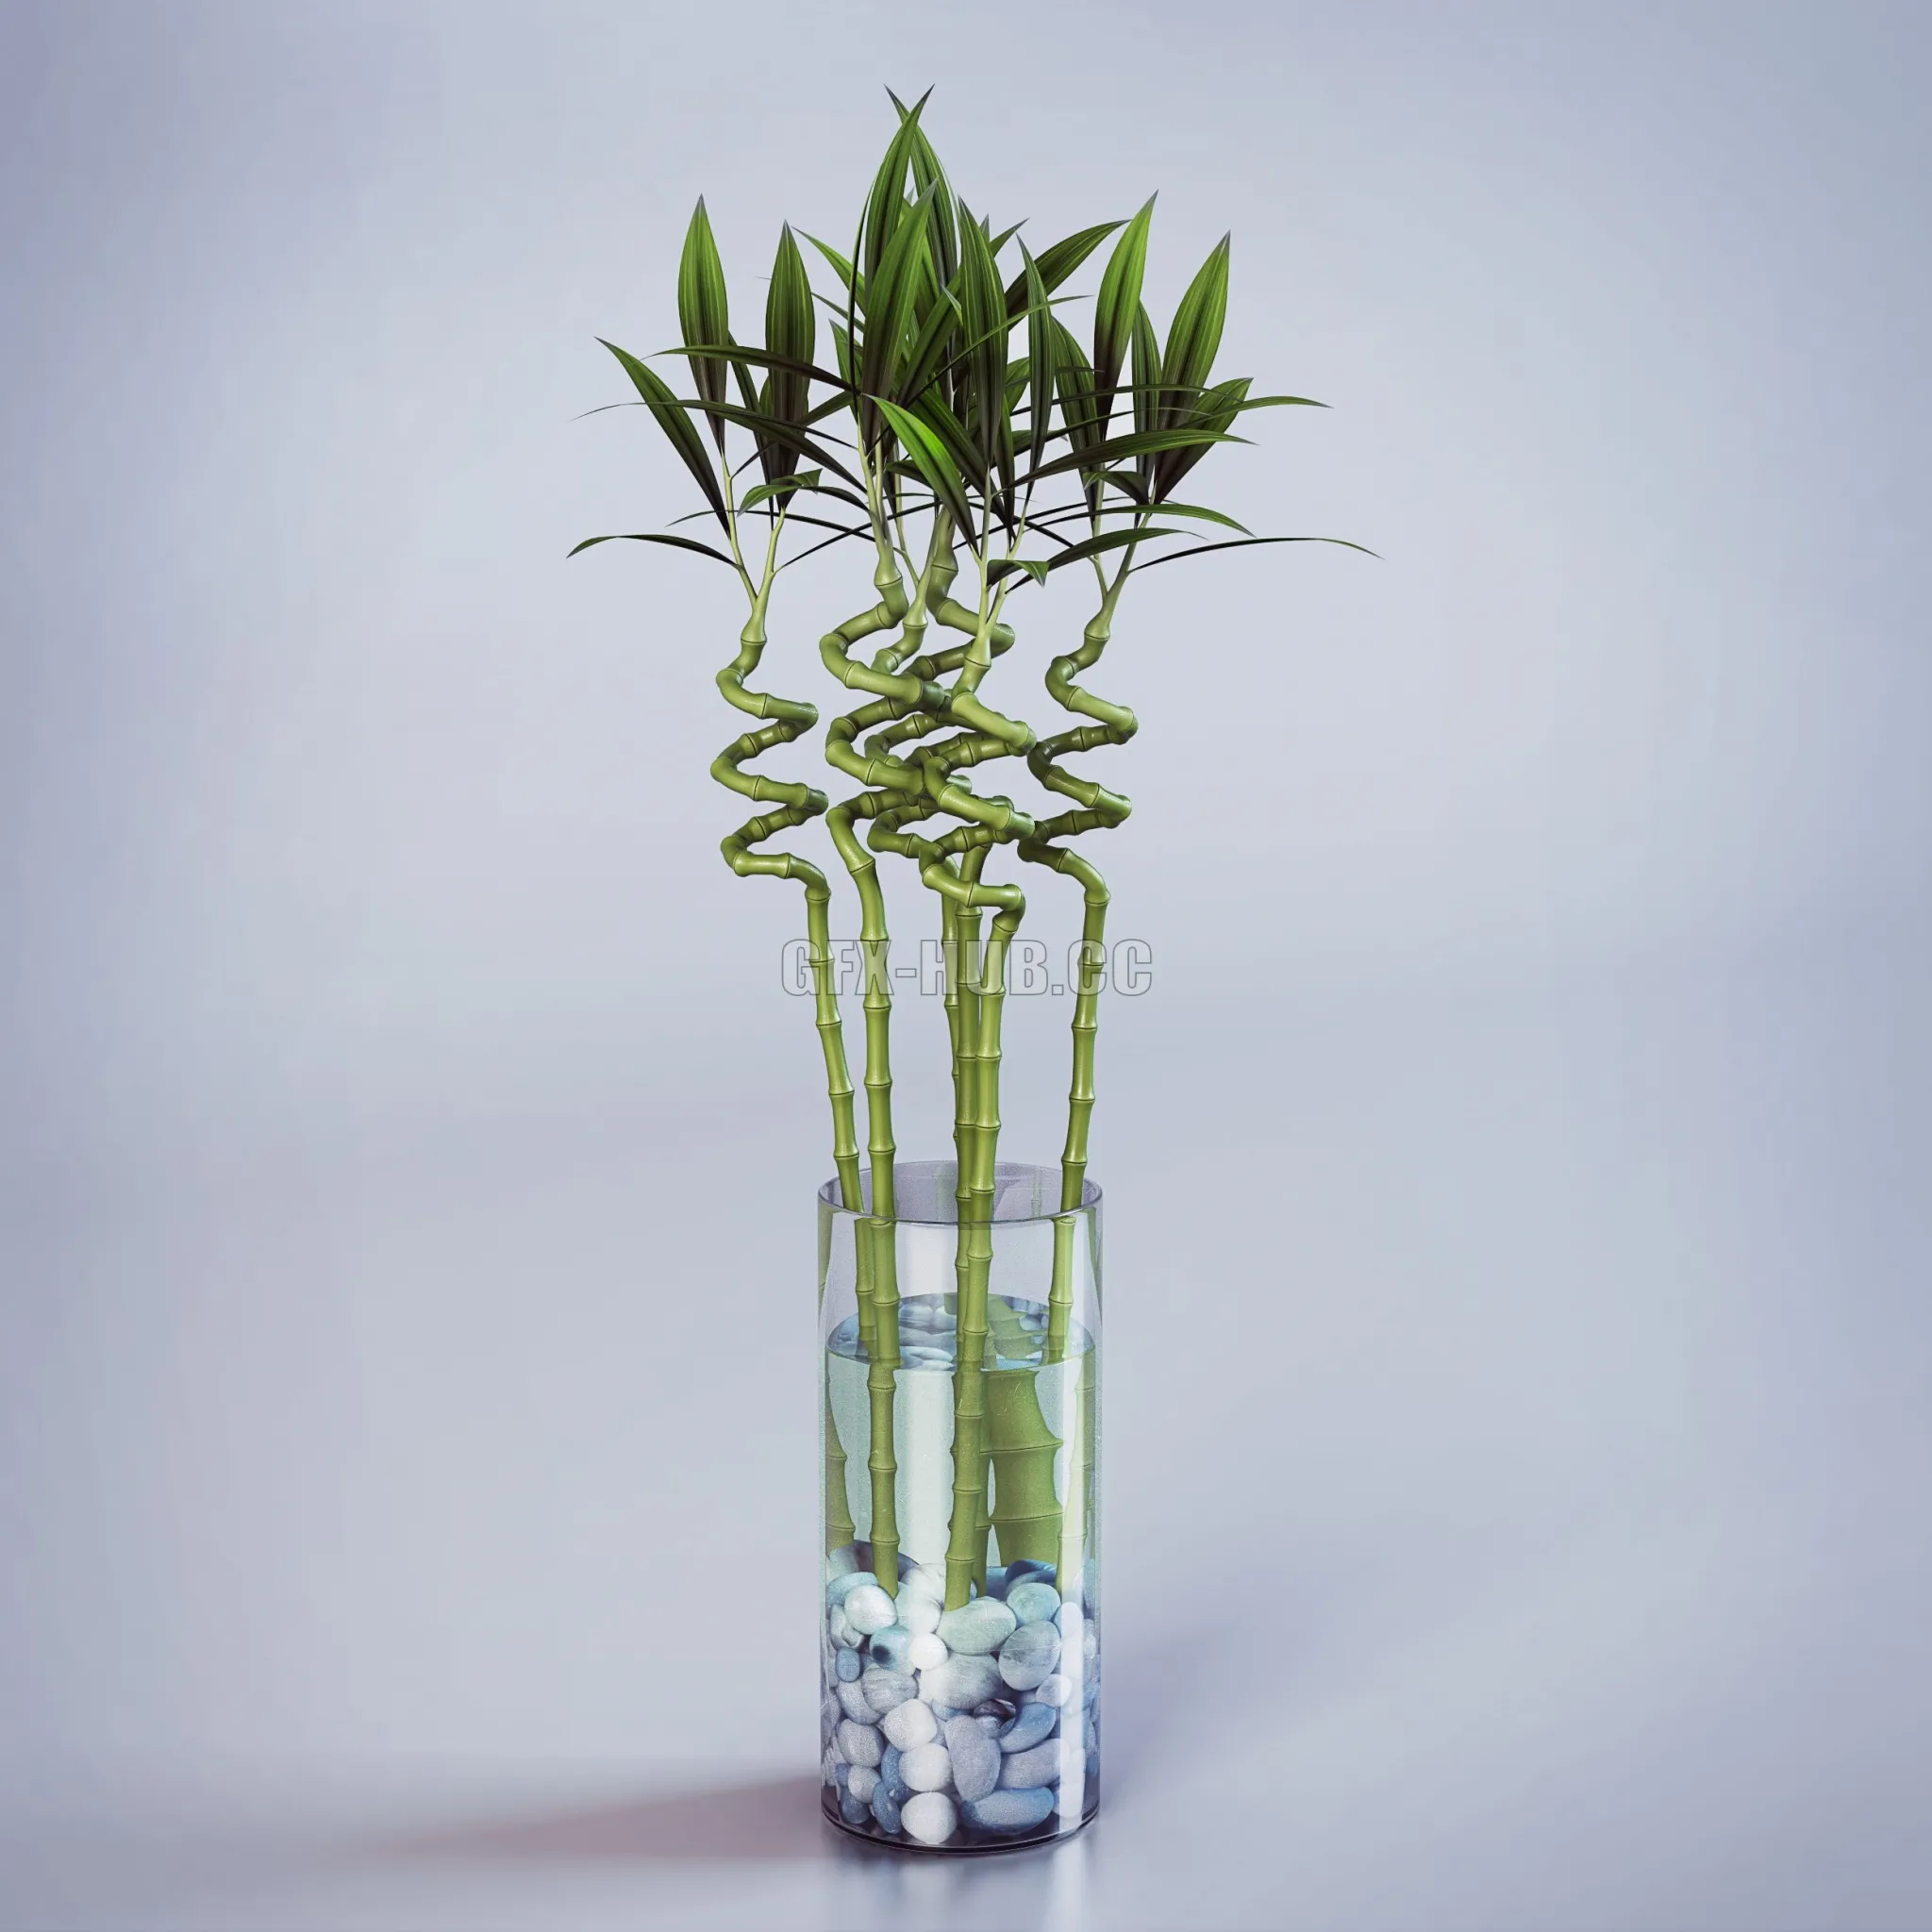 FURNITURE 3D MODELS – Indoor bamboo plant